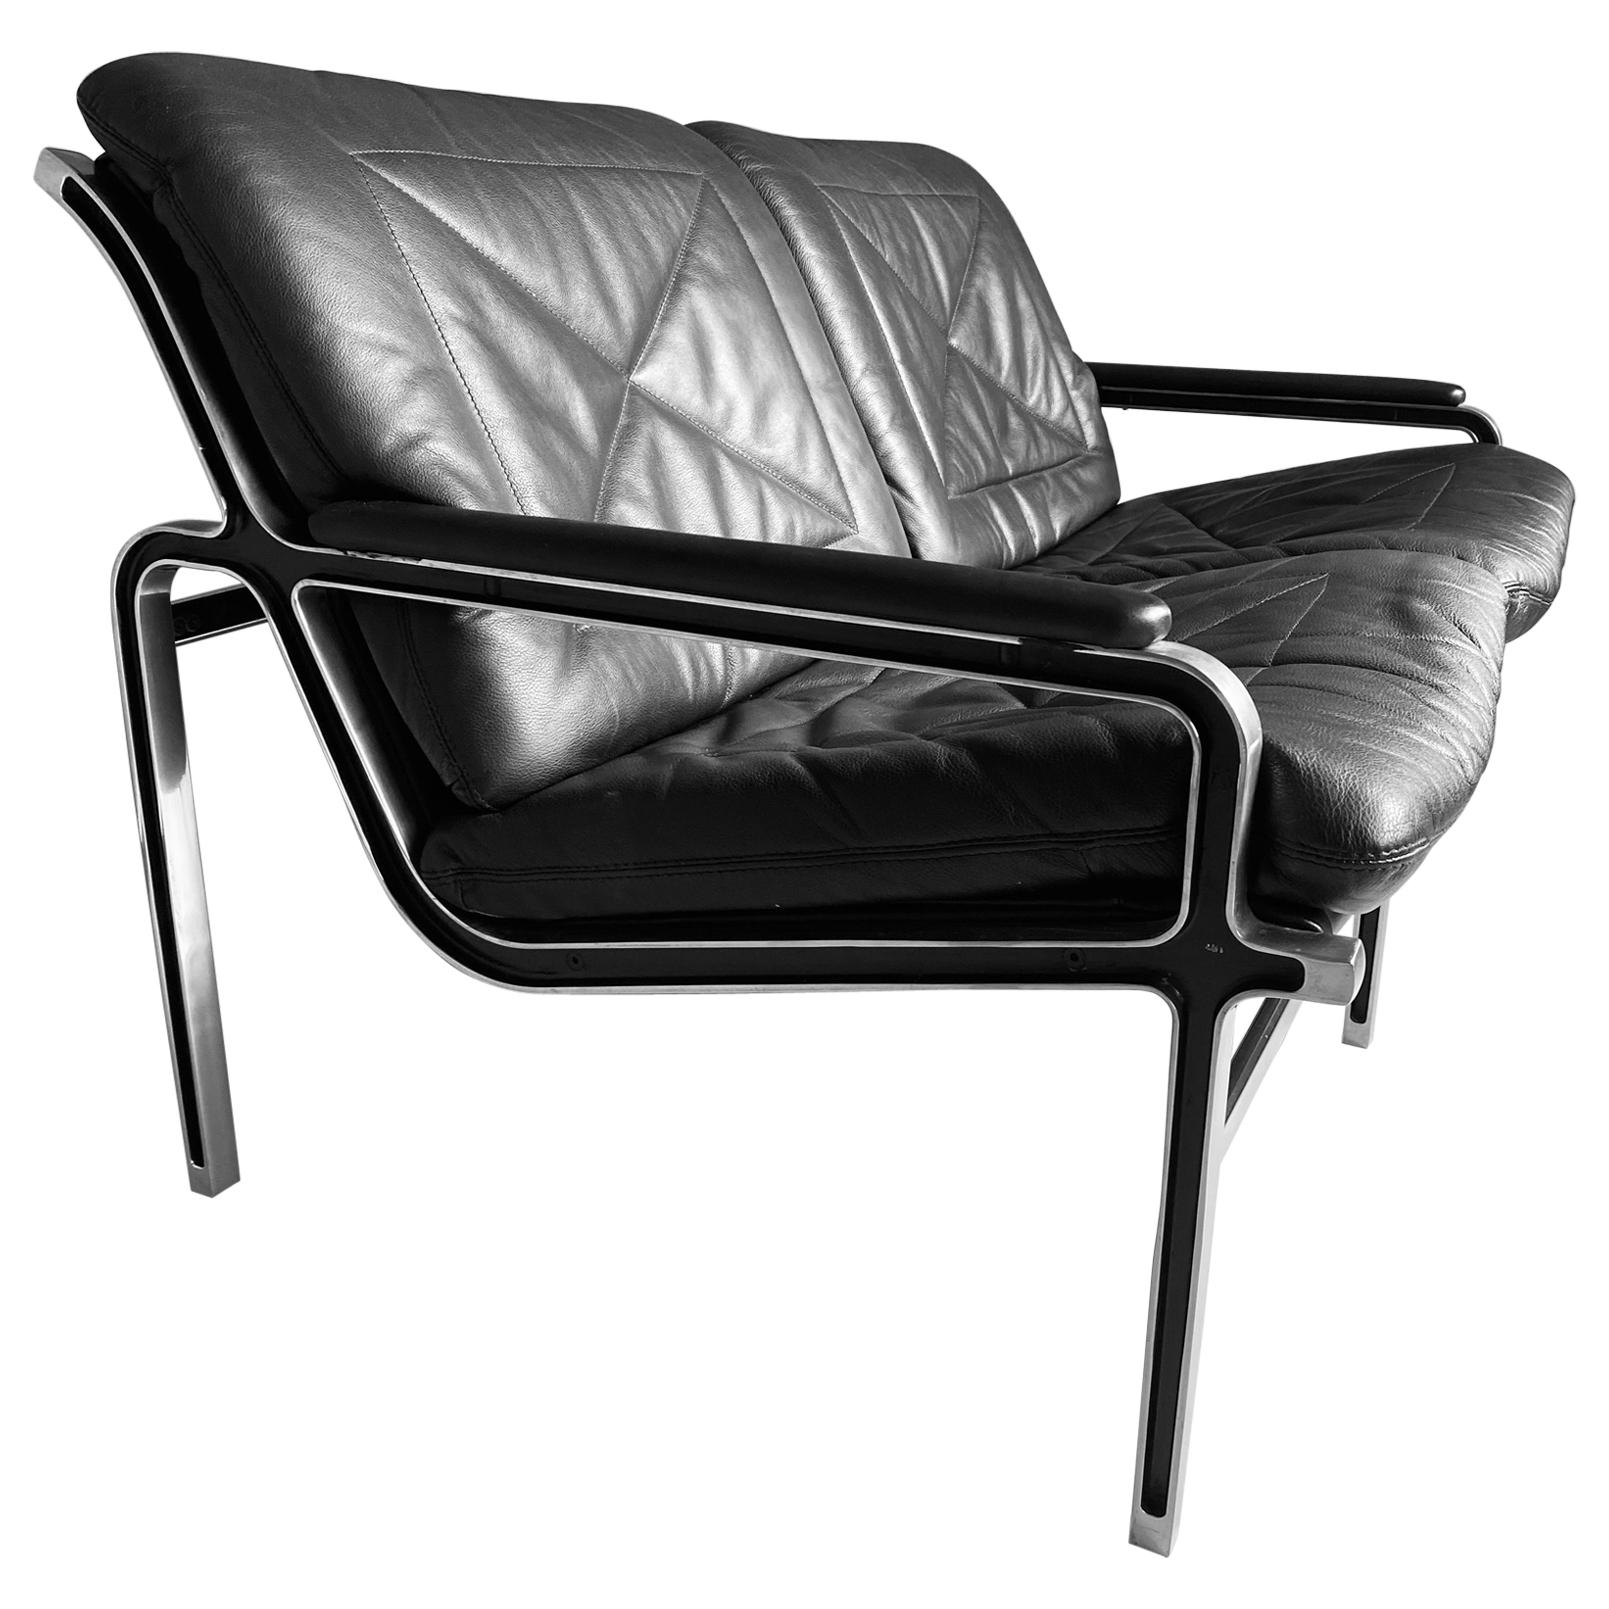 Andre Vanden Beuck Sofa aus Aluminium und schwarzem Leder